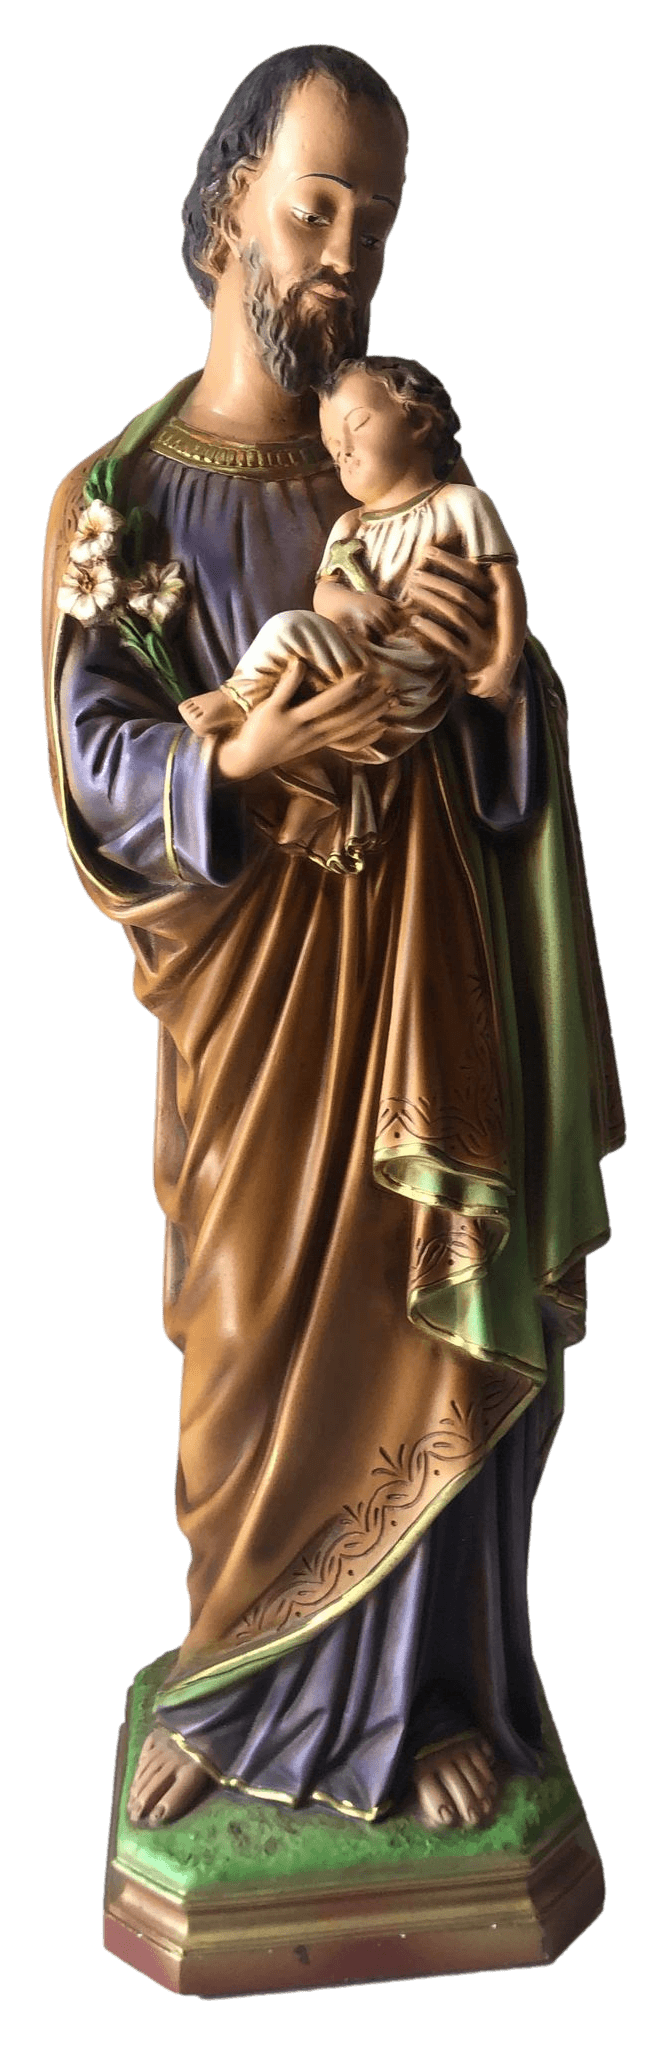 Statue Saint Joseph C.S. 121 Italy Excellent Condition Chalkware 21.5"H x 6.5"W - Ysleta Mission Gift Shop- VOTED El Paso's Best Gift Shop